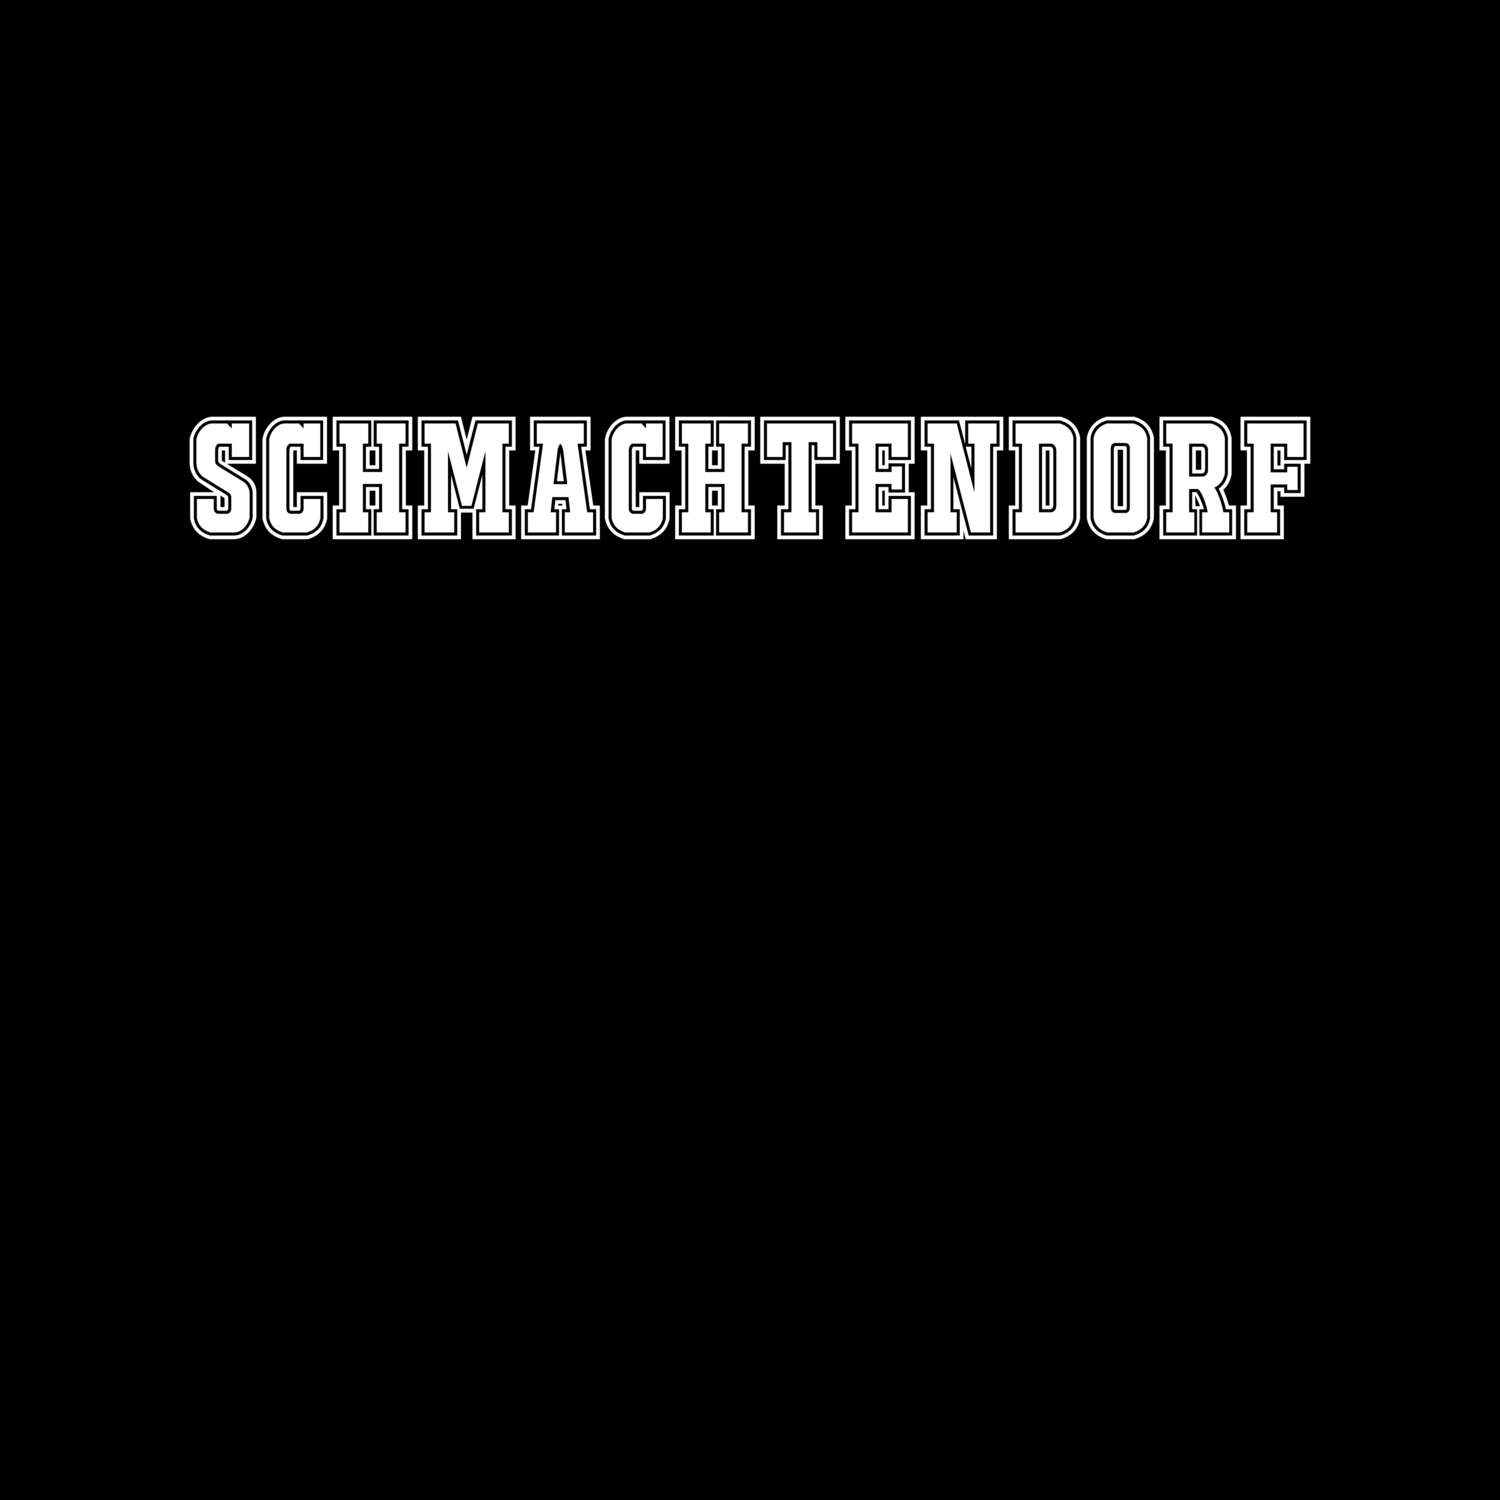 Schmachtendorf T-Shirt »Classic«